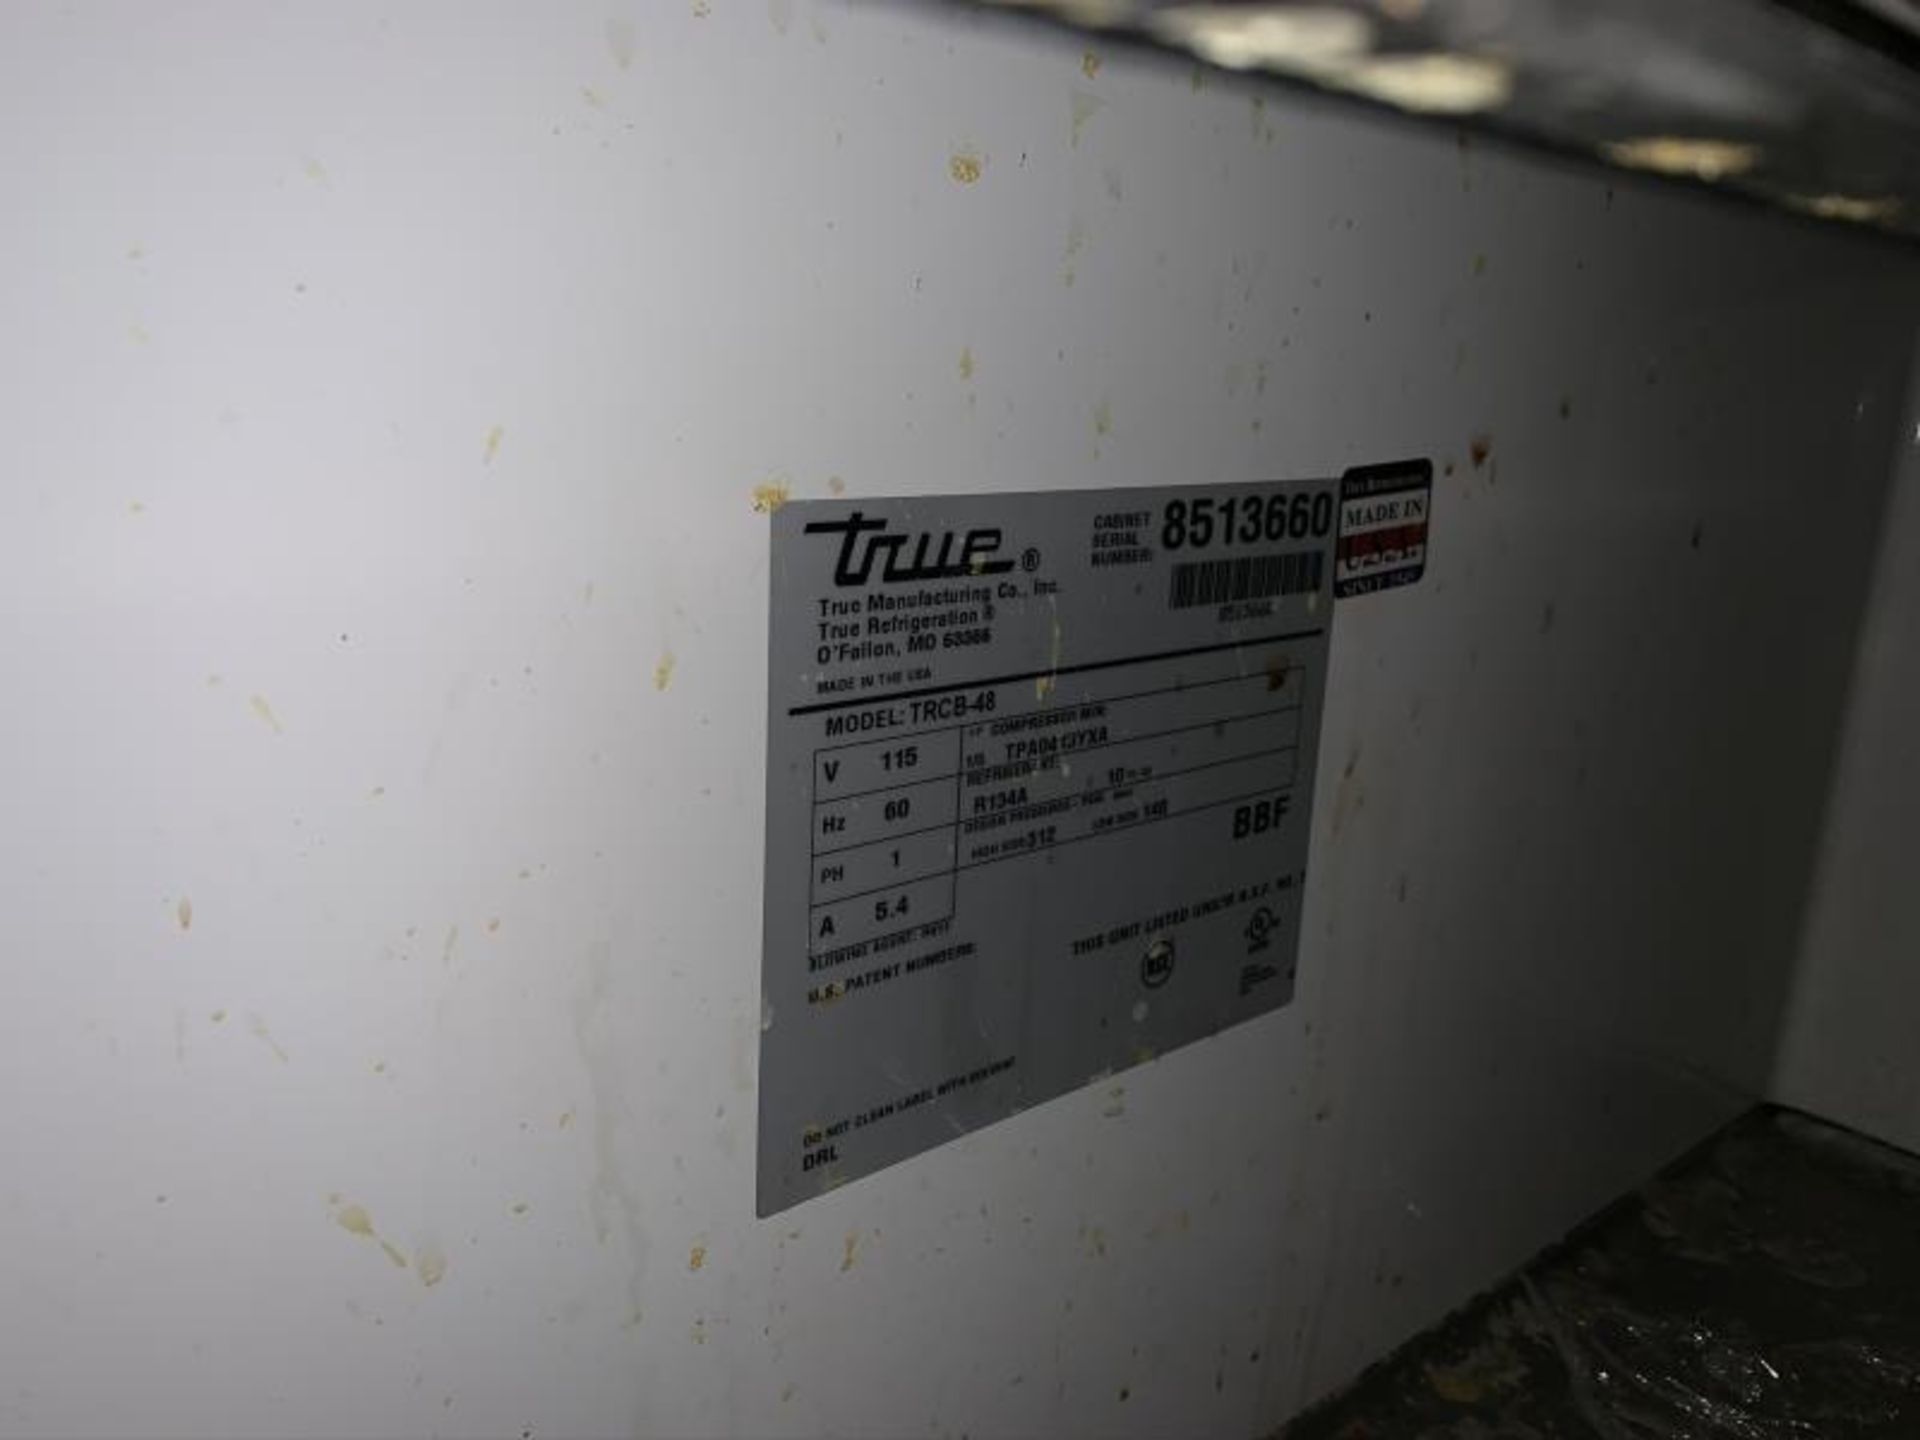 True refrigerator grill base, 48" M: TRCB-48, SN: 8513660 - Image 2 of 2